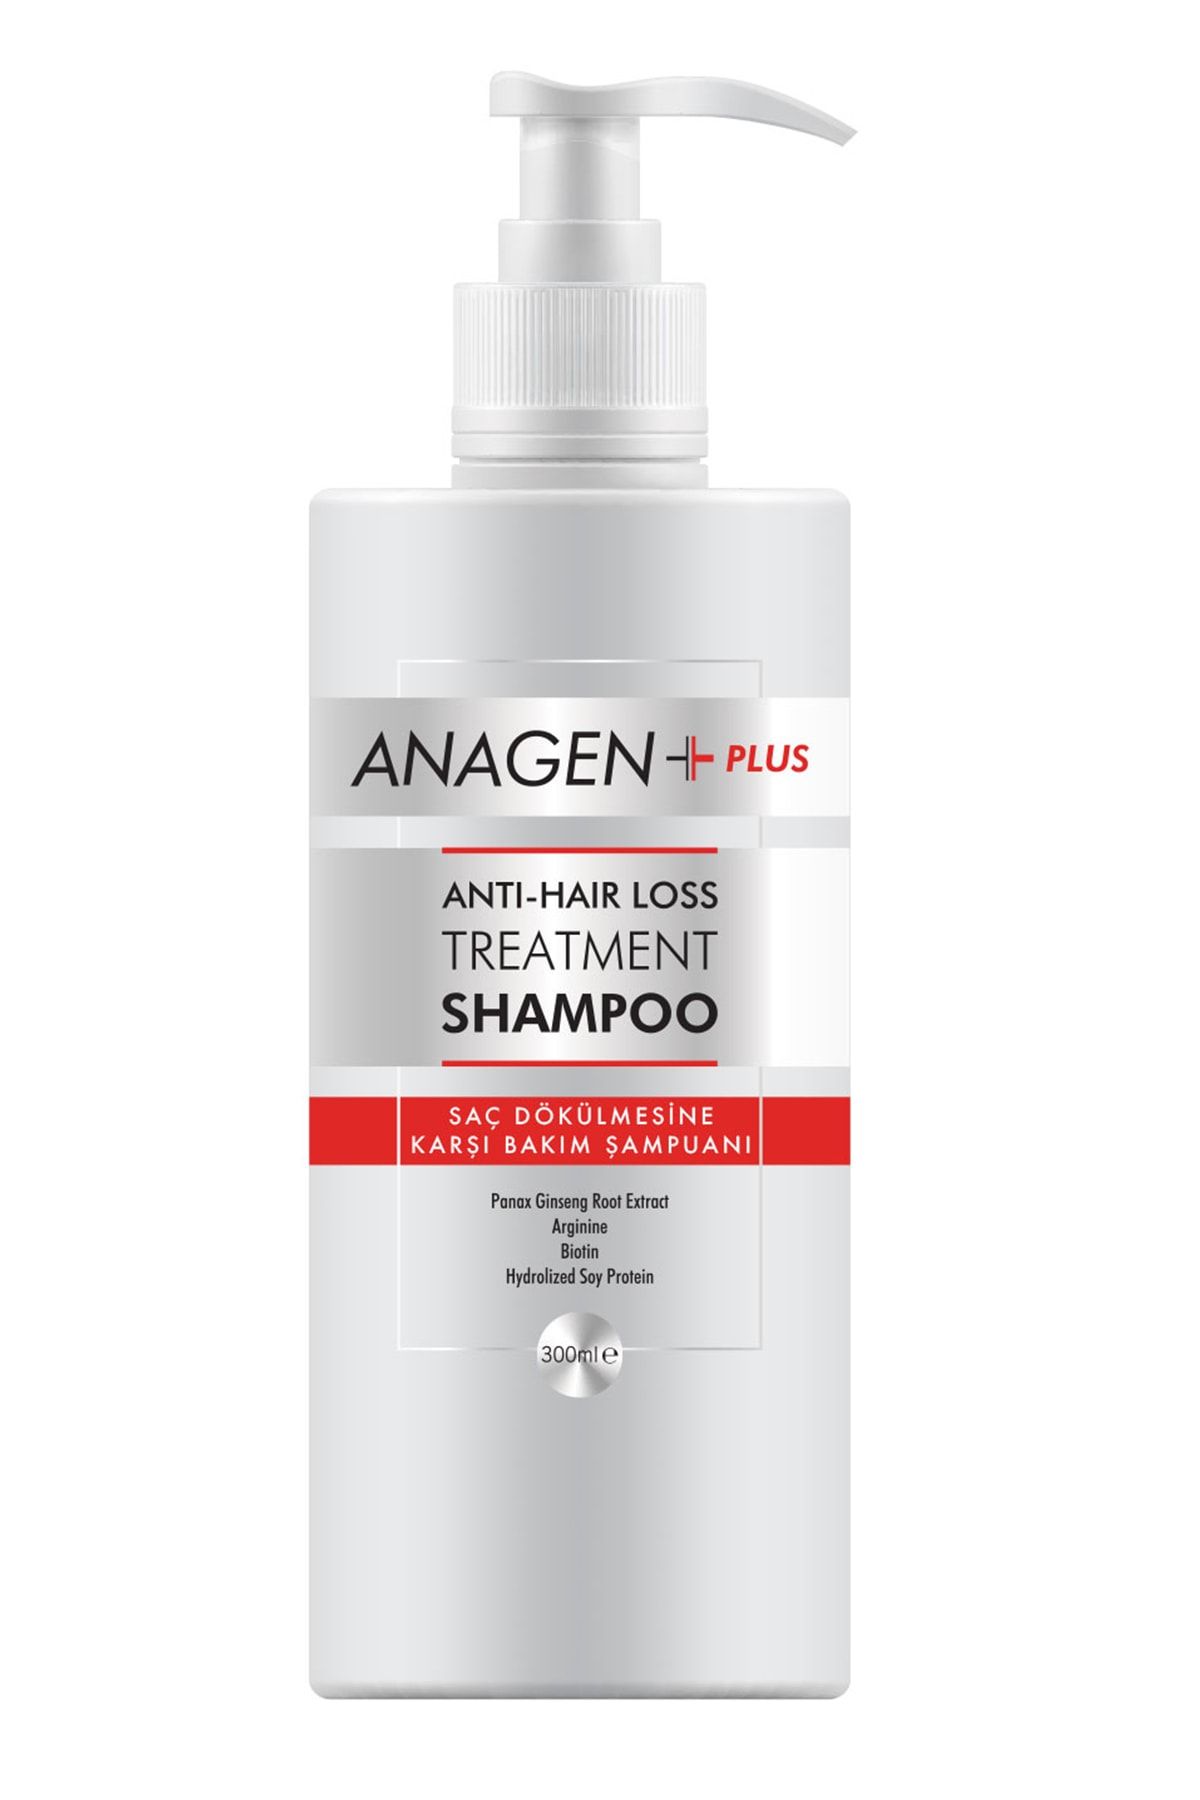 Anagen Plus Anti-hair Loss Treatment Shampoo - Saç Dökülmesine Karşı Bakım Şampuanı 300ml